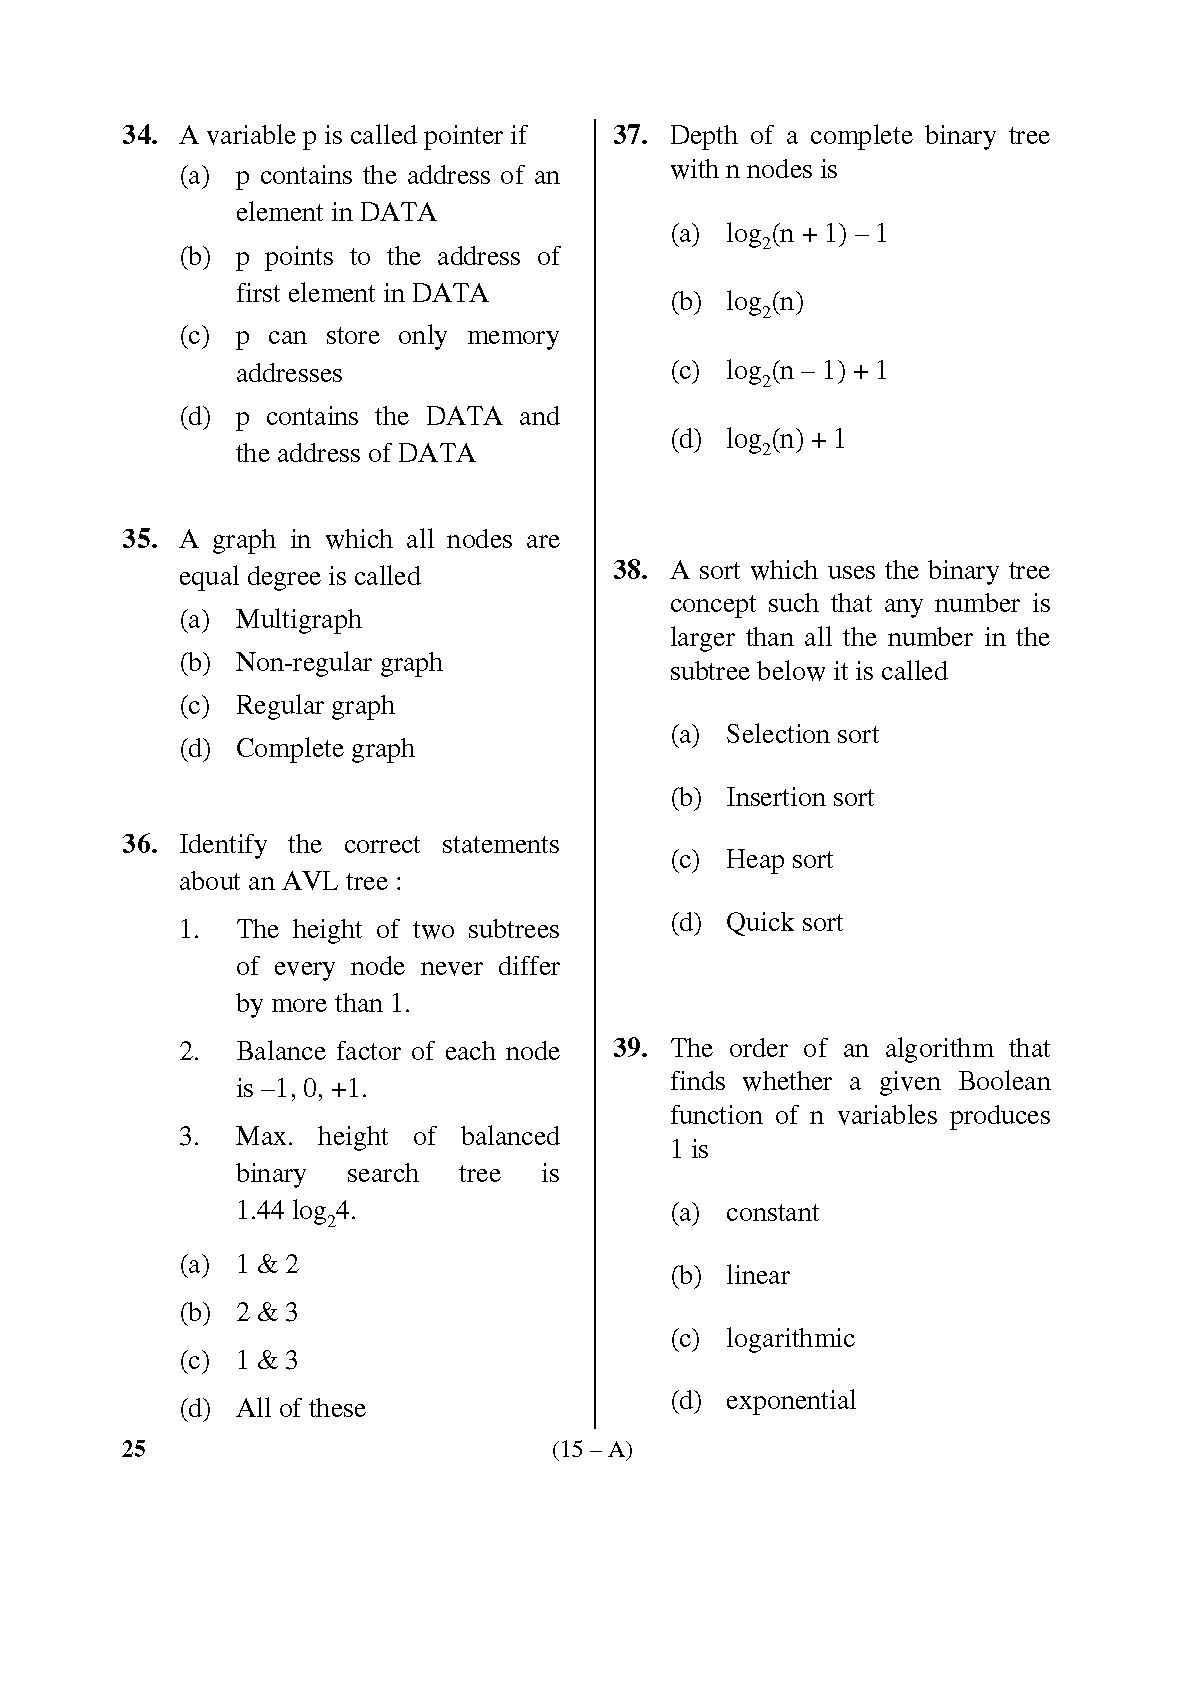 Karnataka PSC Computer Science Teachers Exam Sample Question Paper Subject code 25 15